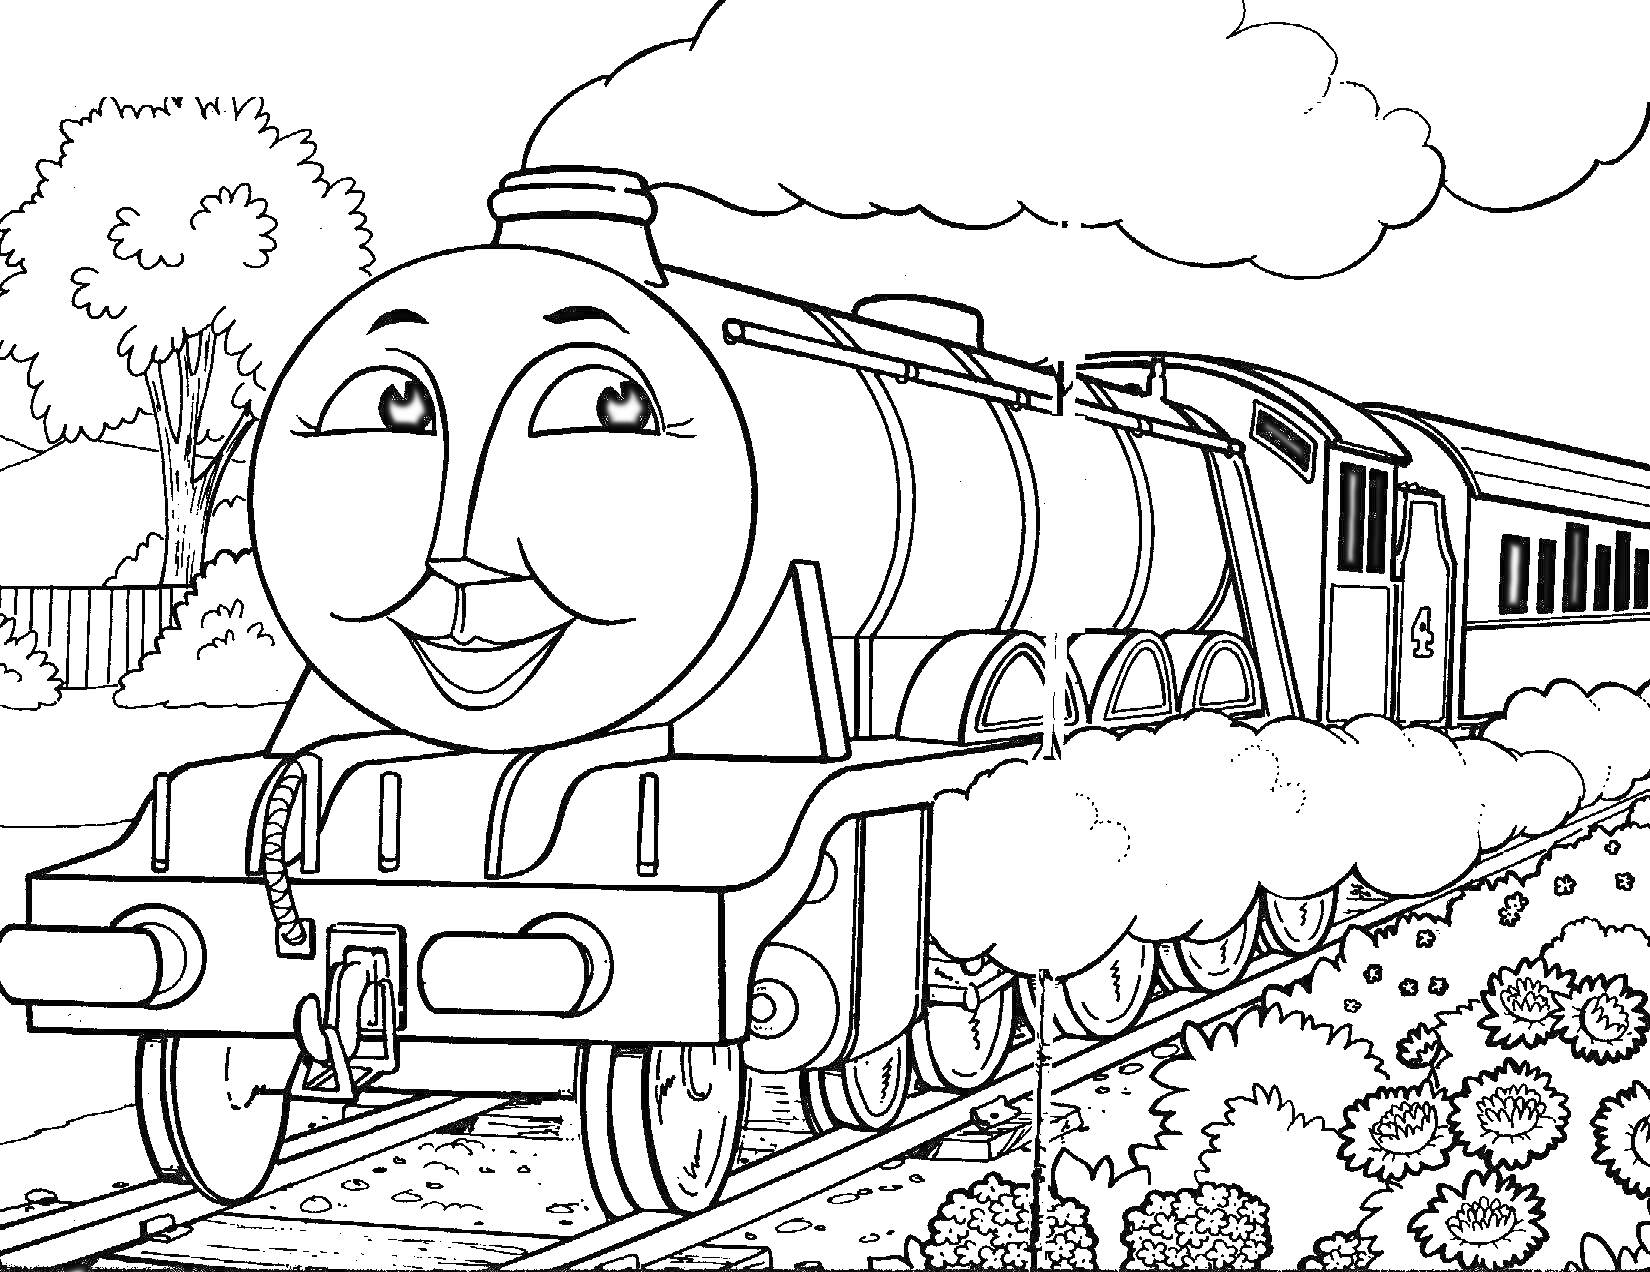 Паровозик Томас на железной дороге с пассажирским вагоном на фоне деревьев и кустов